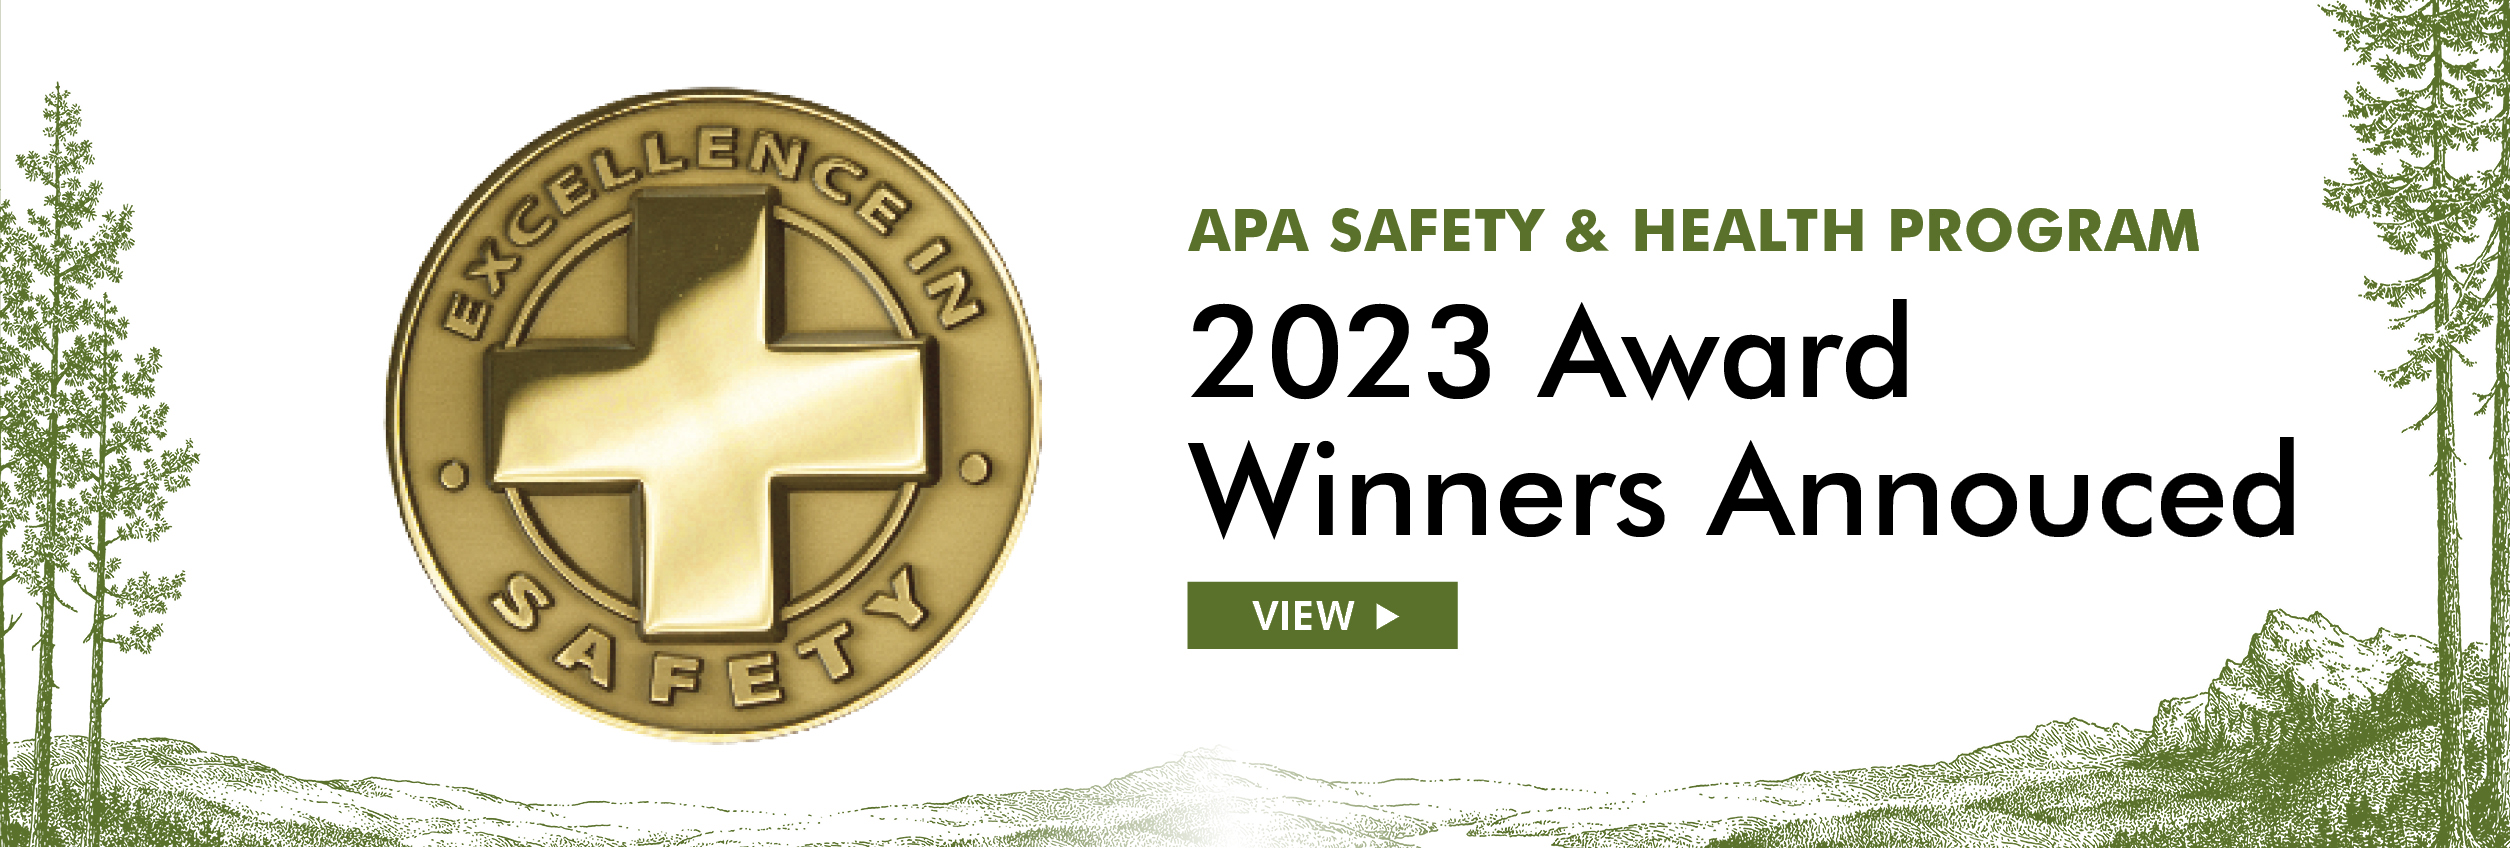 2023 Safety & Health Award Winners